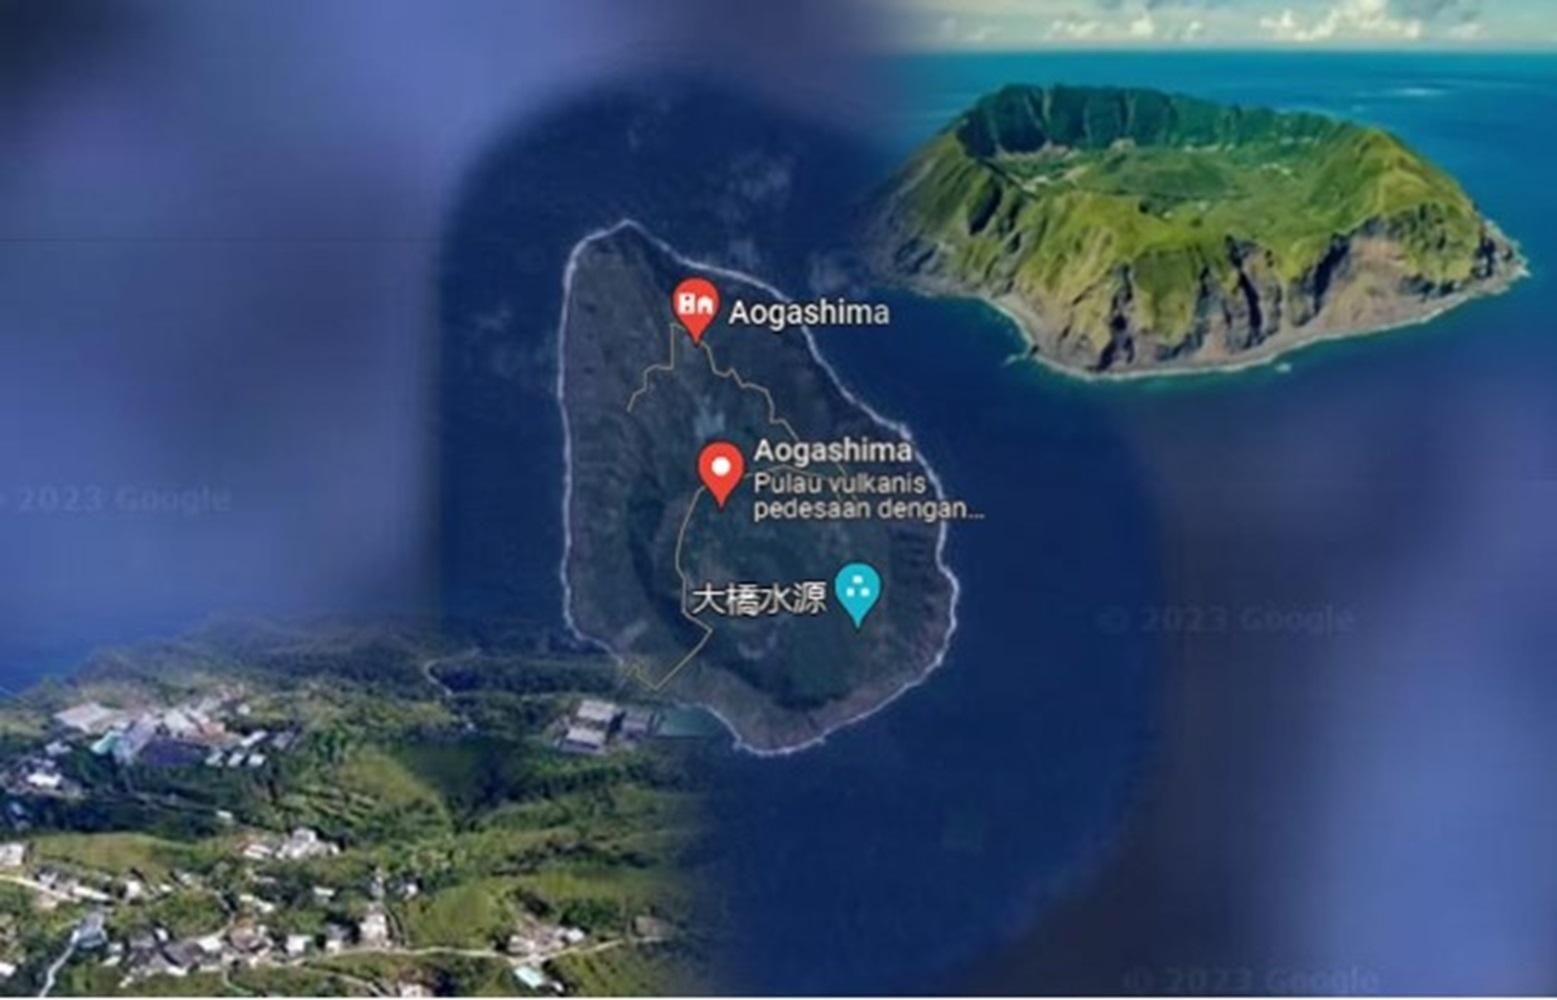 Aogashima, Melihat Kehidupan Desa di Kawah Gunung Berapi Aktif Jepang 